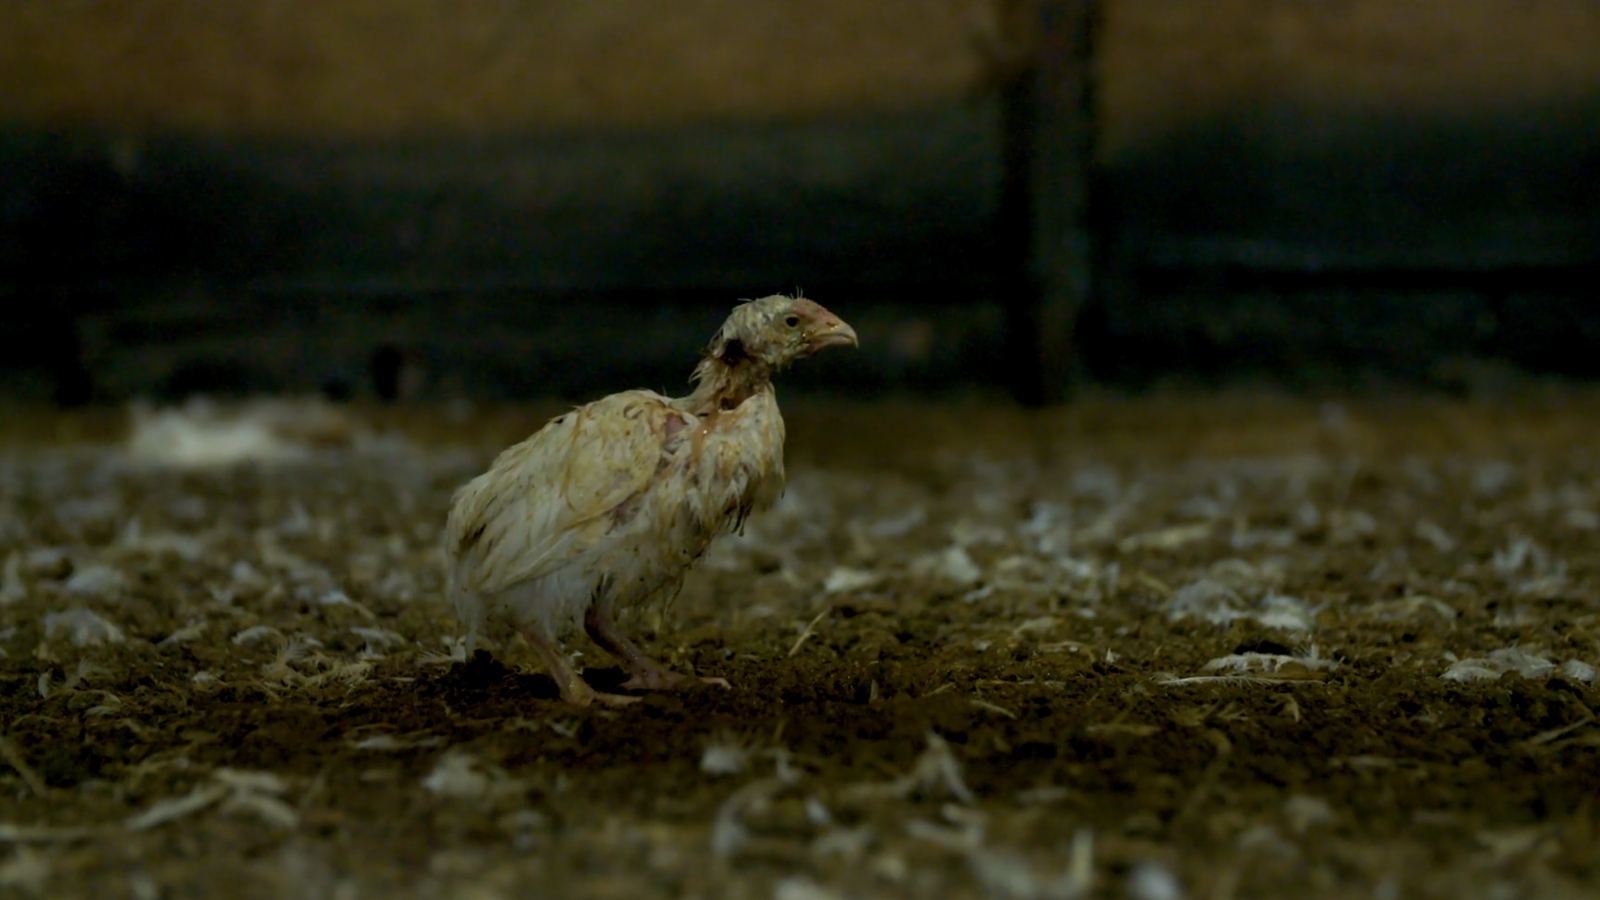 chicken suffering on factory farm